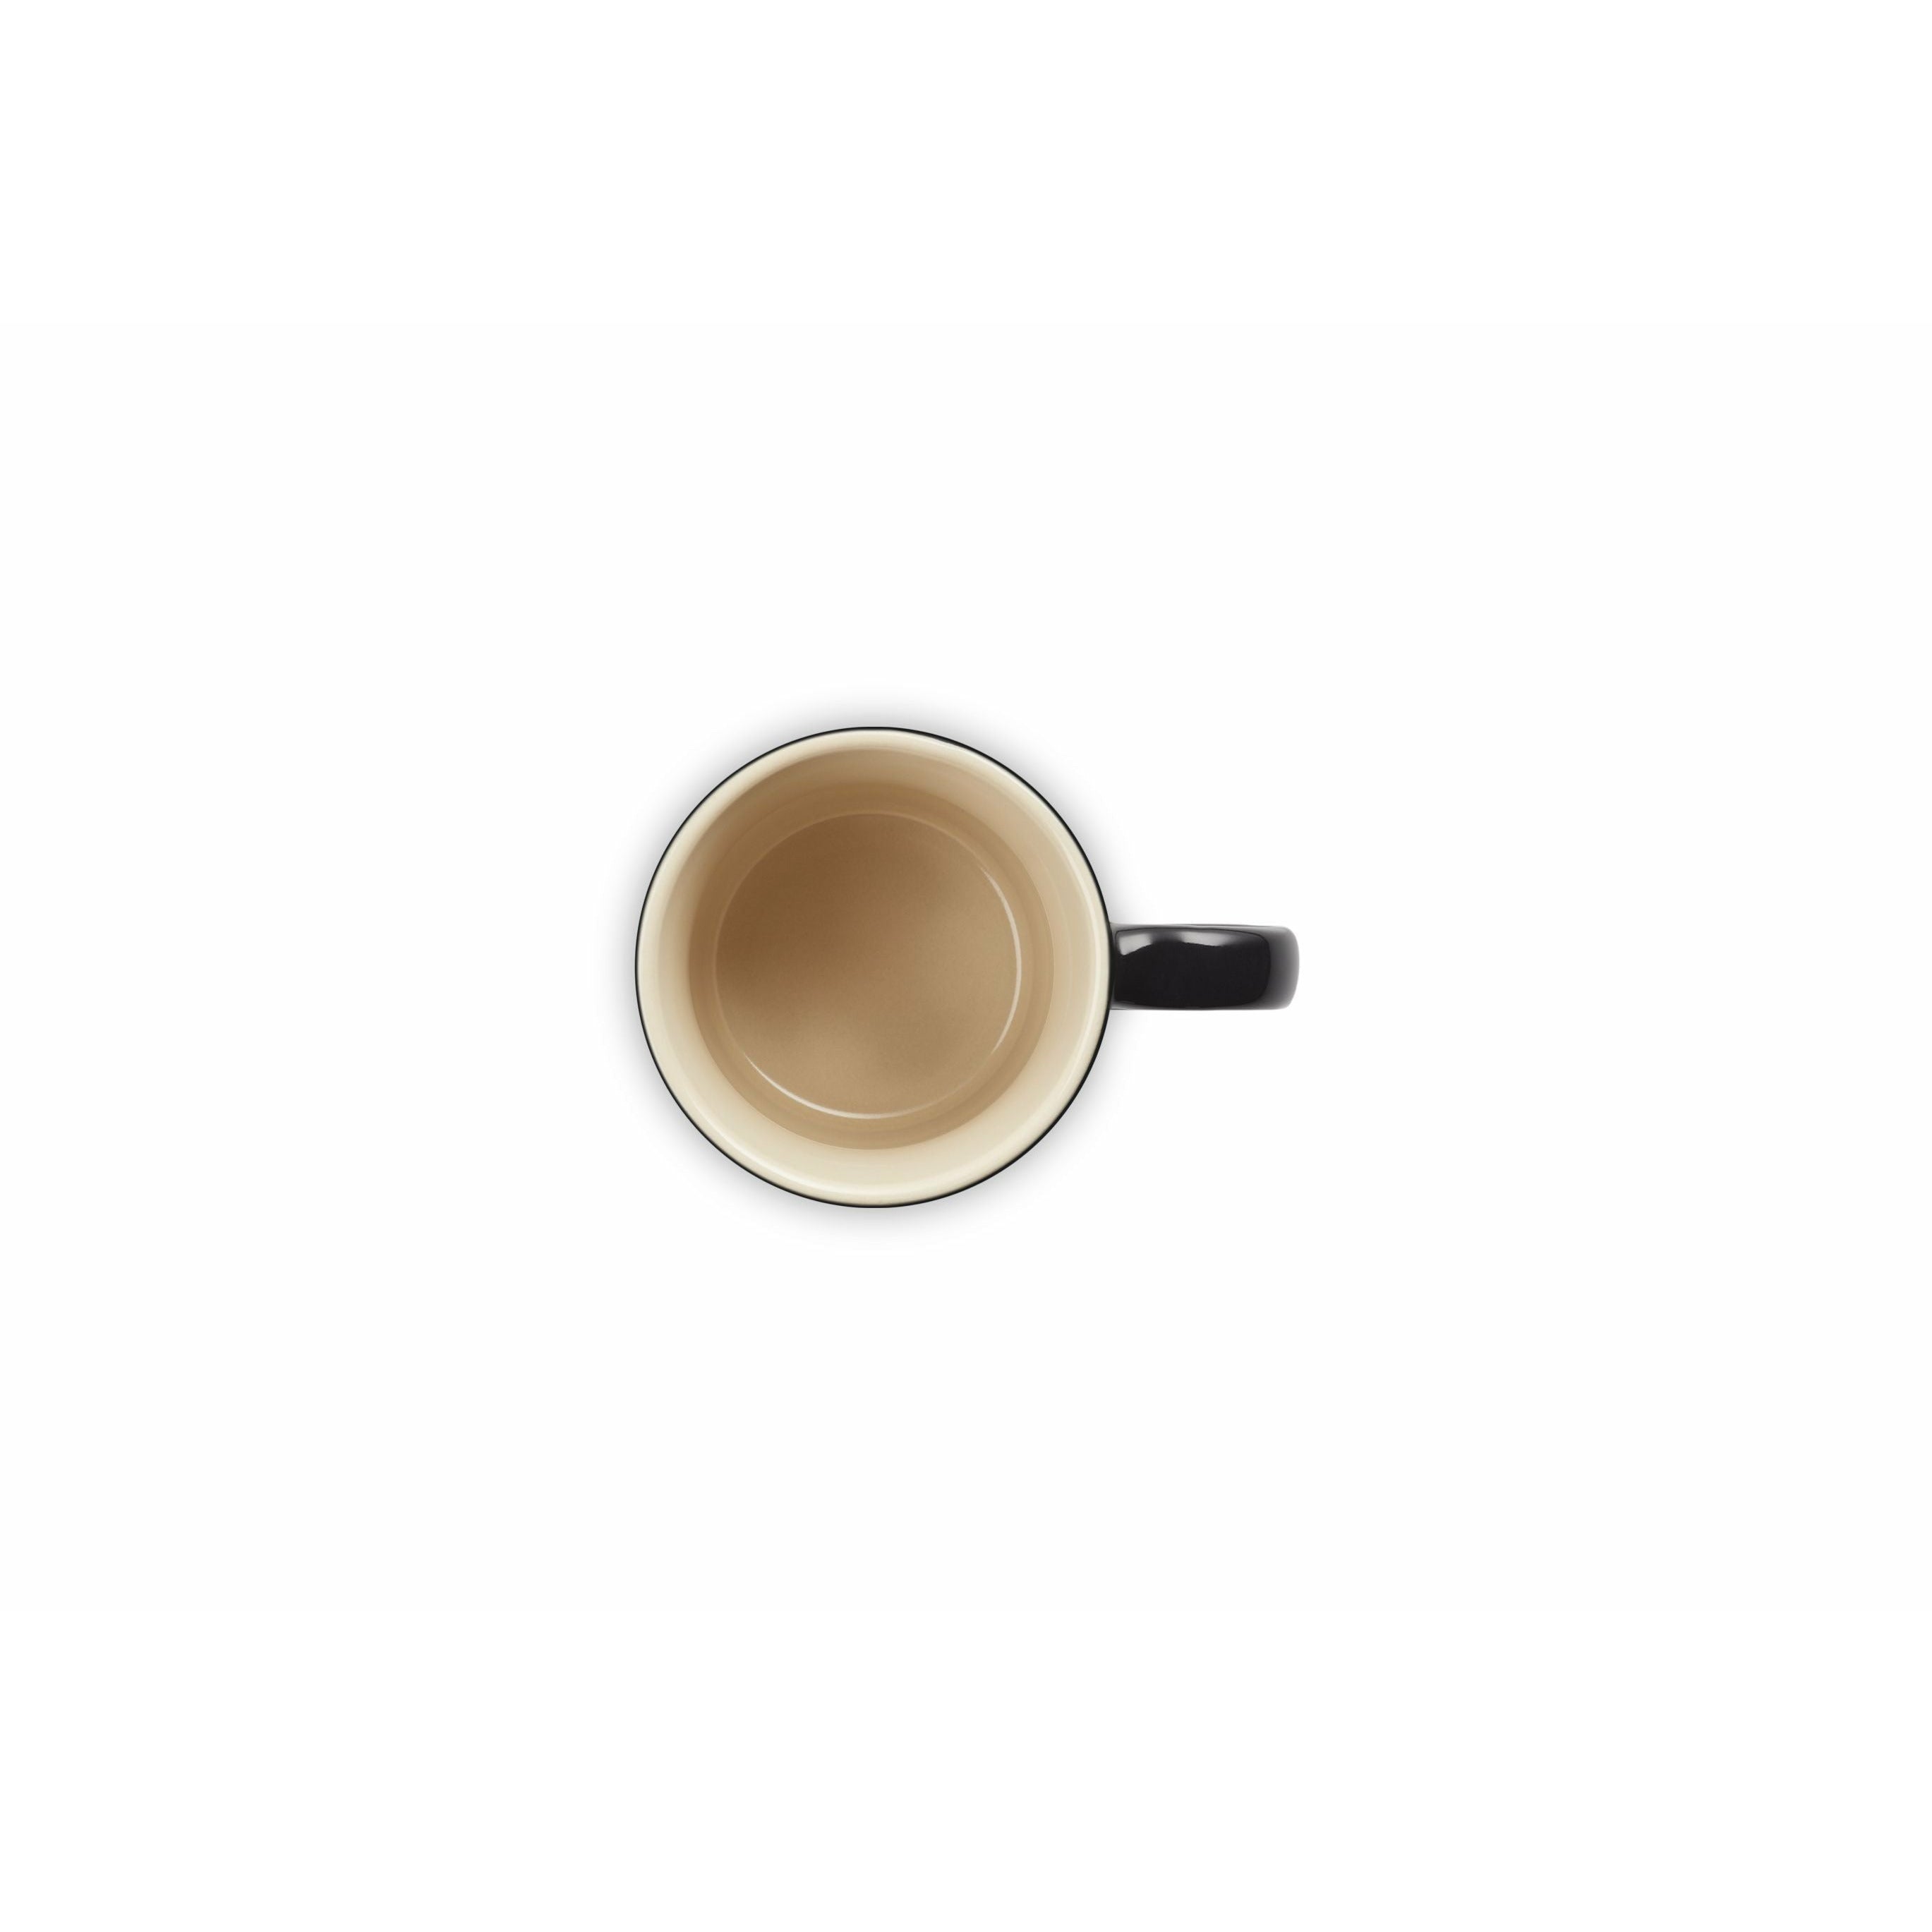 Le creuset espresso kopp 100 ml, blank svart